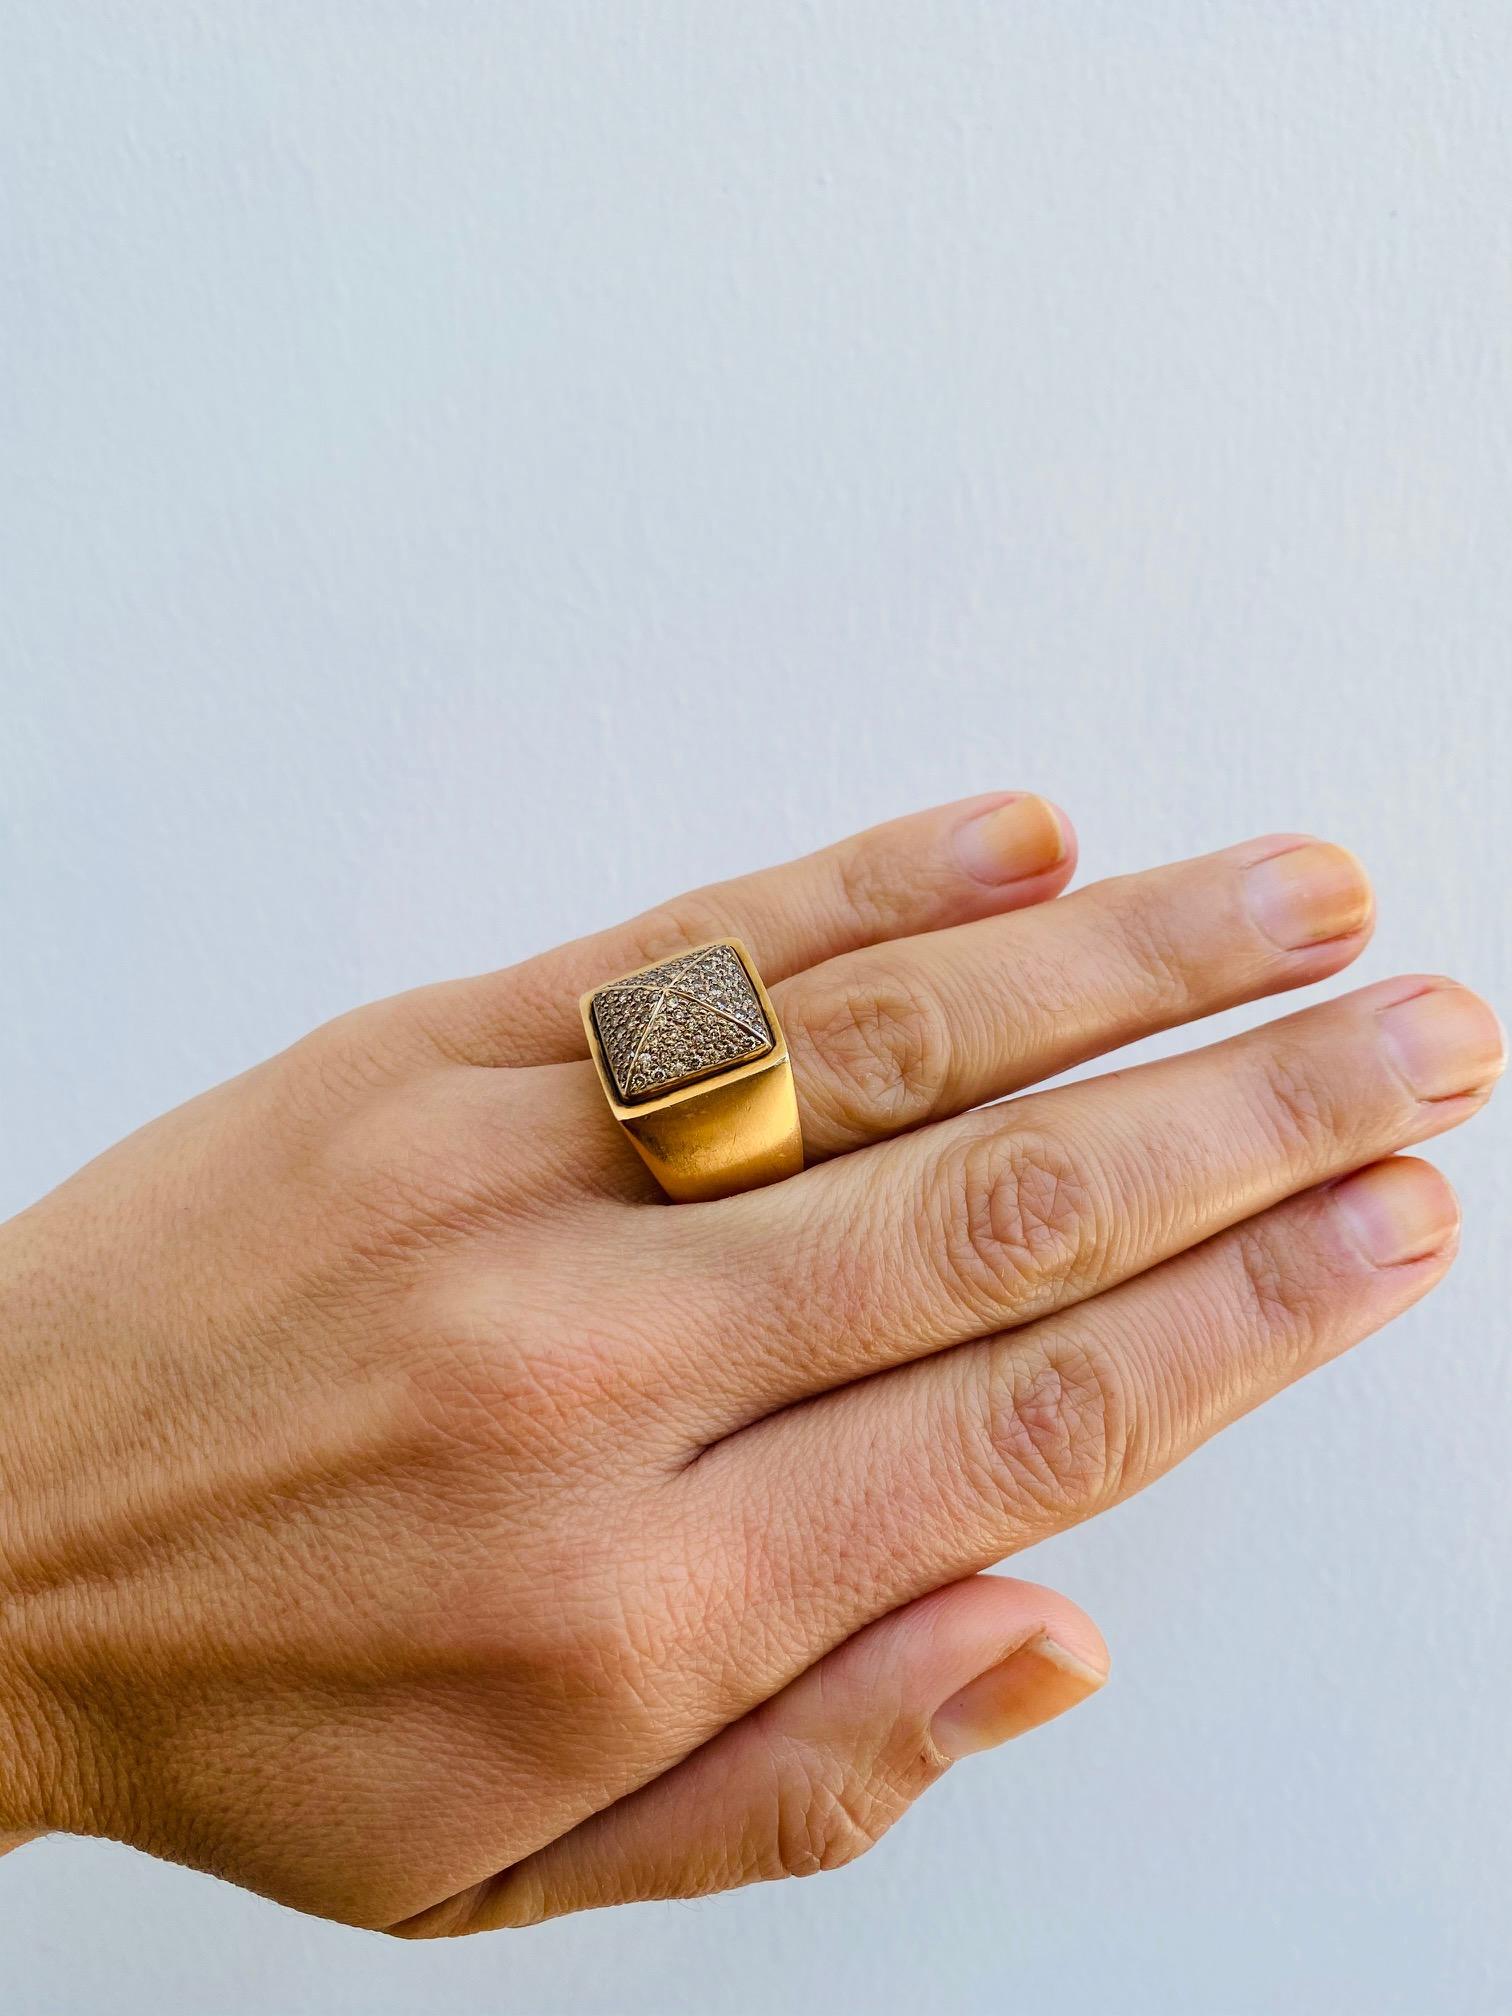 petoskey stone engagement ring